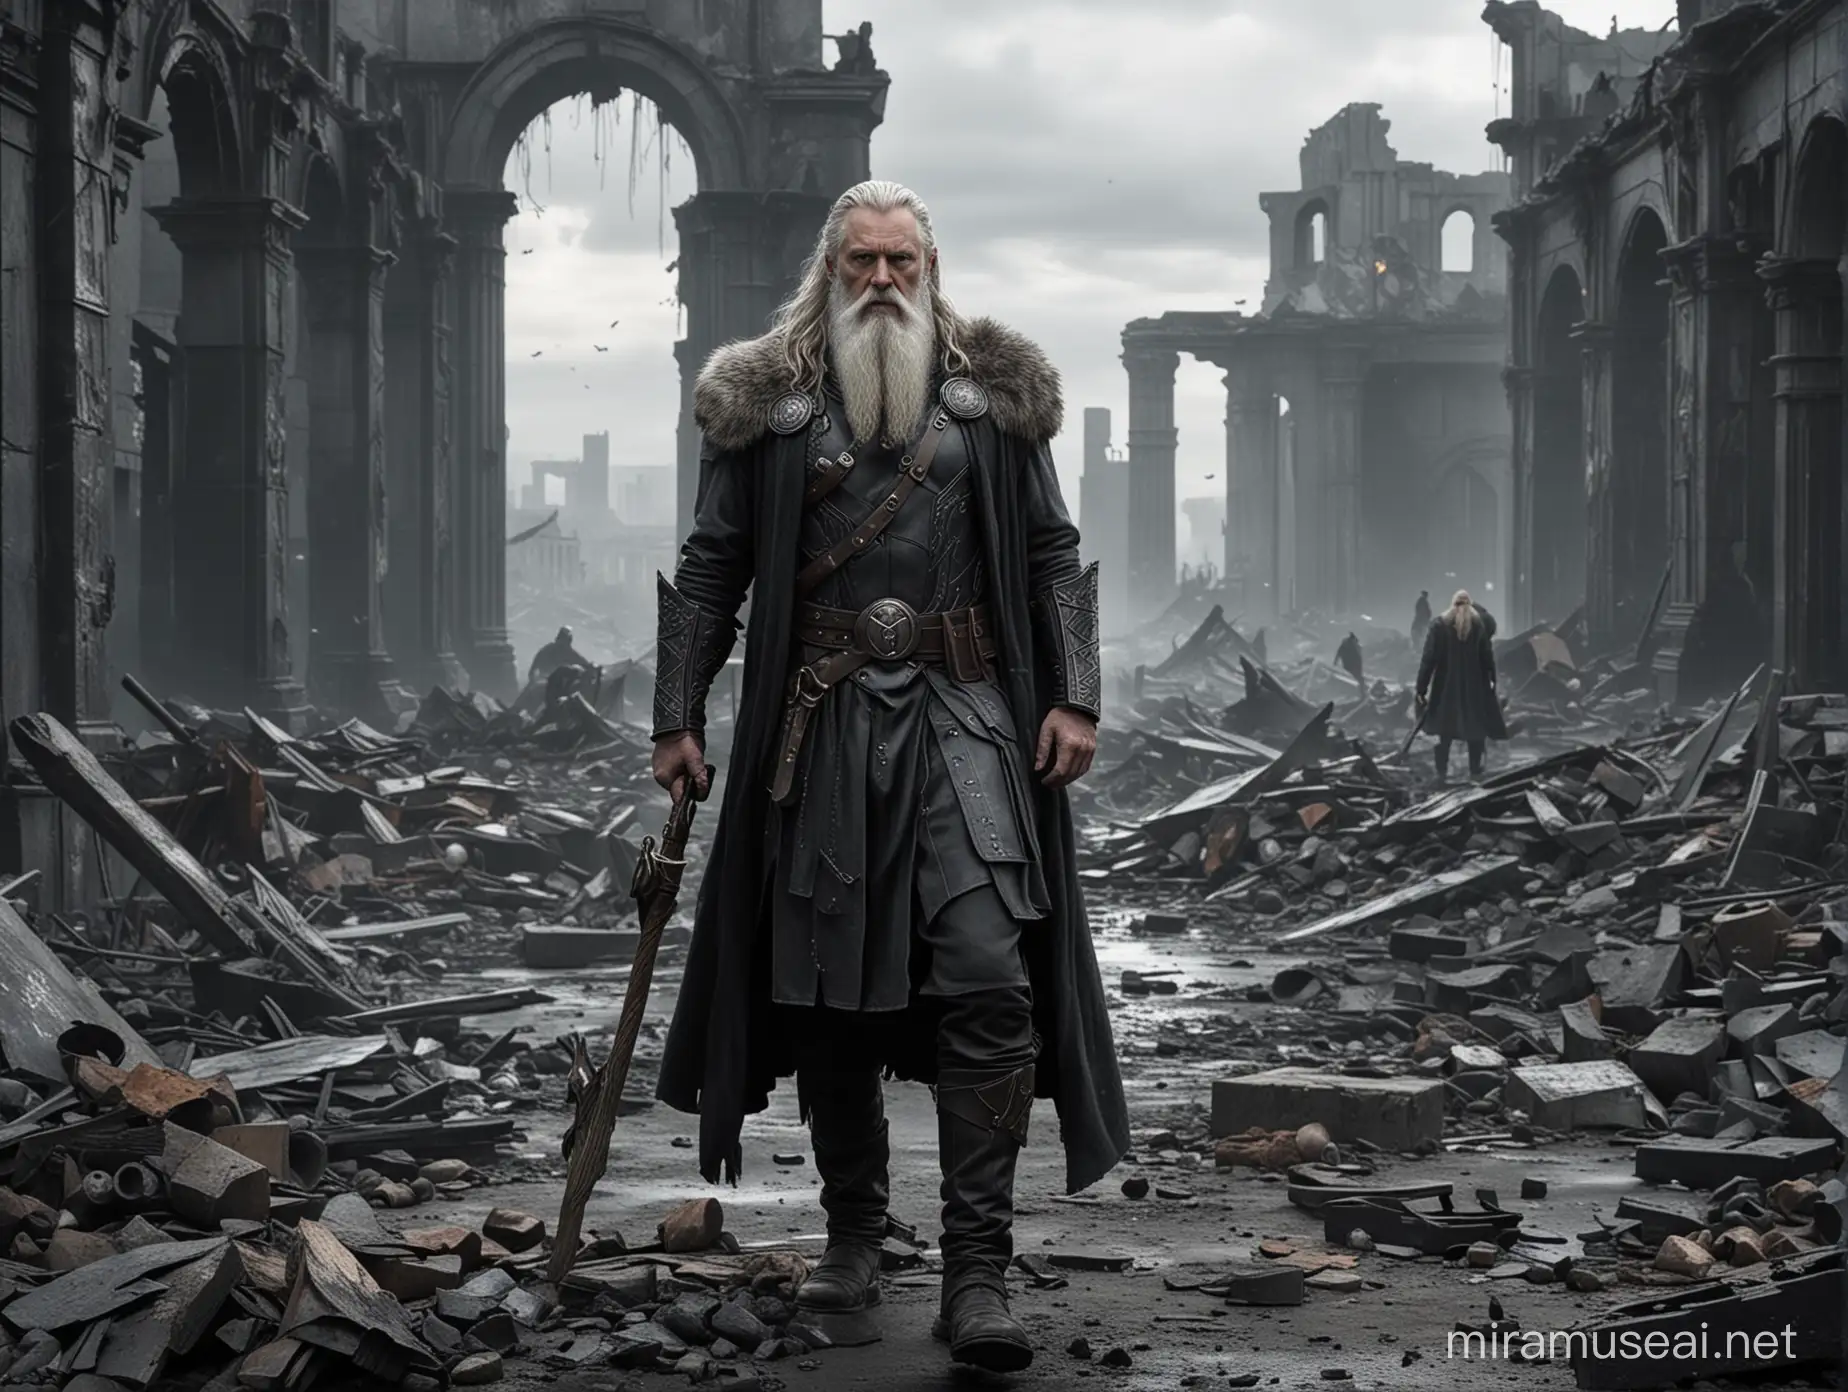 Odin Amidst Apocalyptic Ruins Godlike Figure Emerges Among Survivors